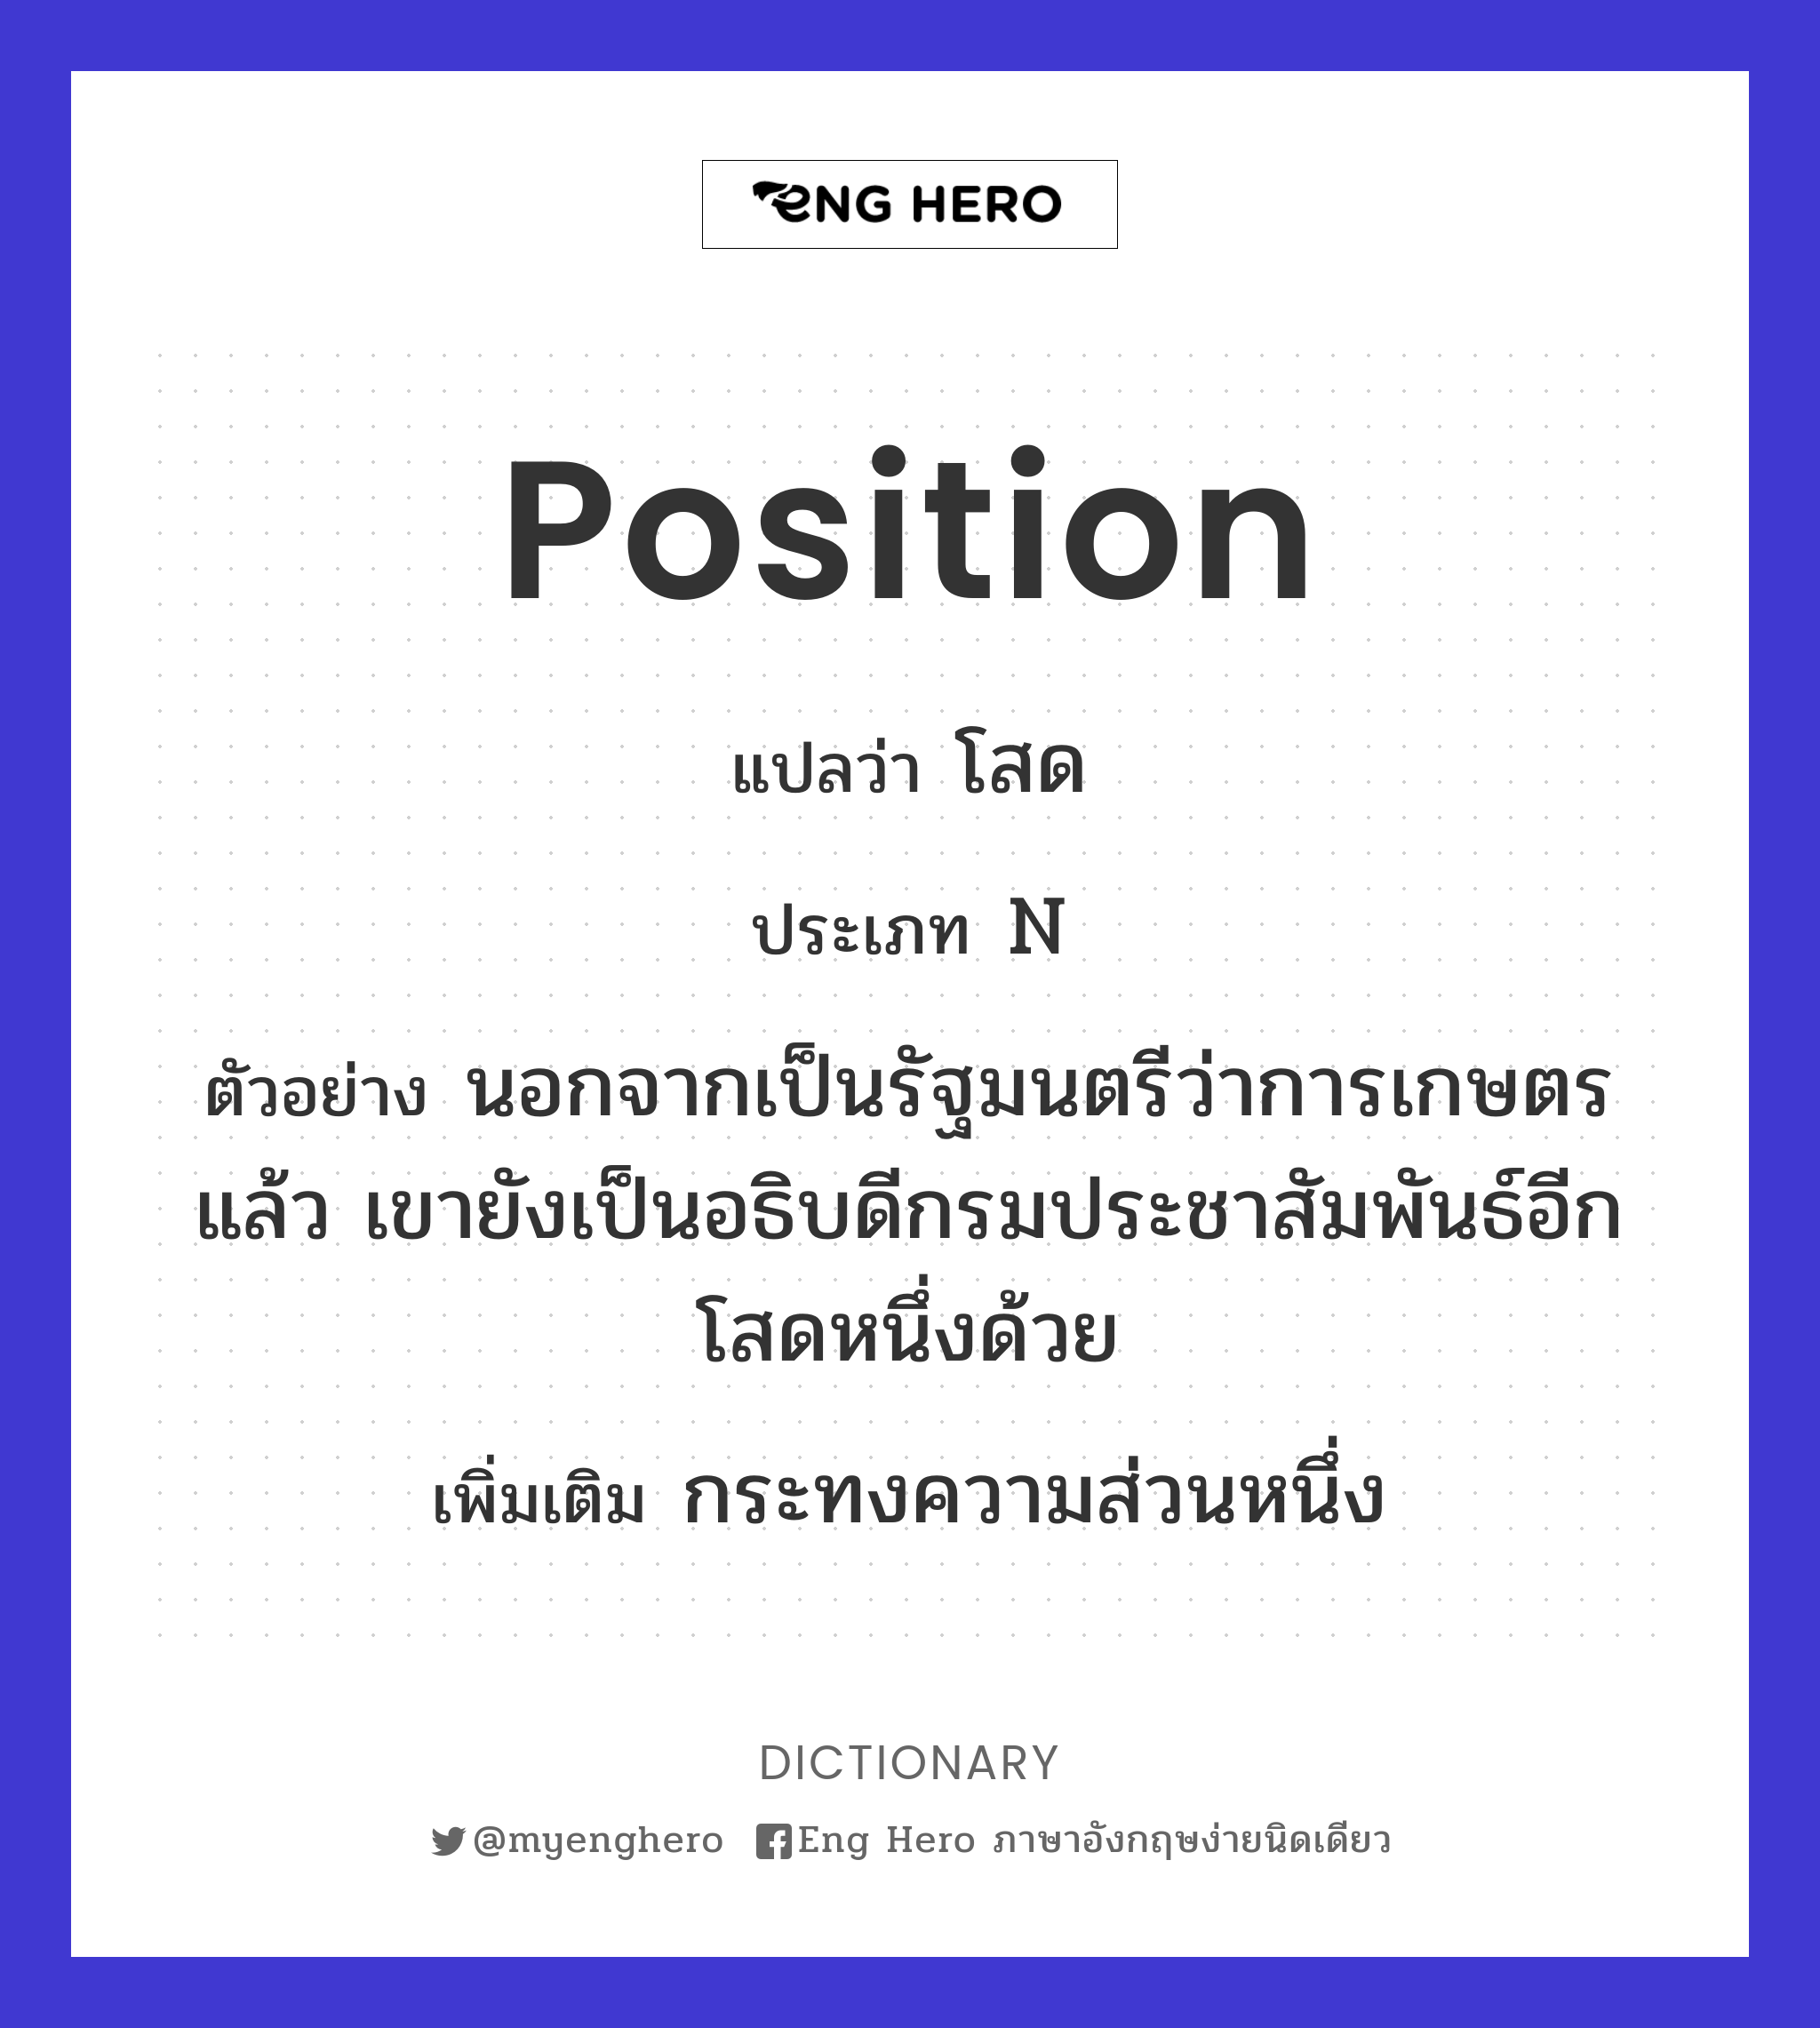 position